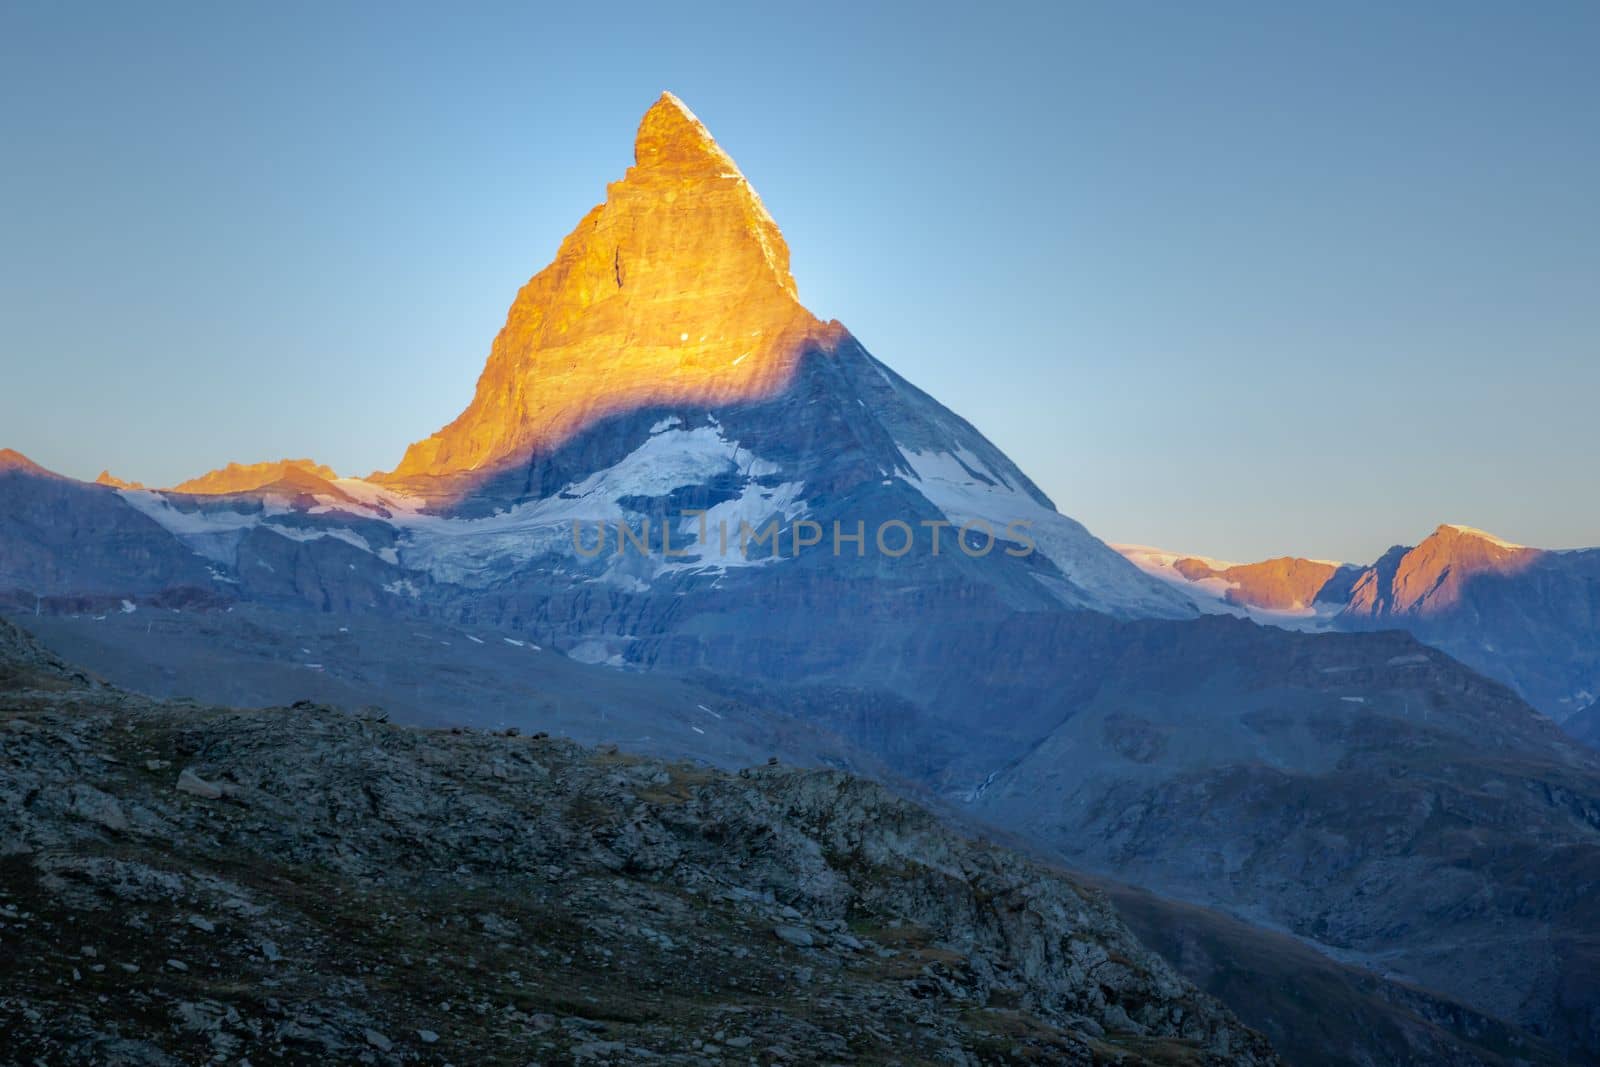 Reflection of the Matterhorn on blue lake at sunrise, Swiss Alps, Zermatt by positivetravelart